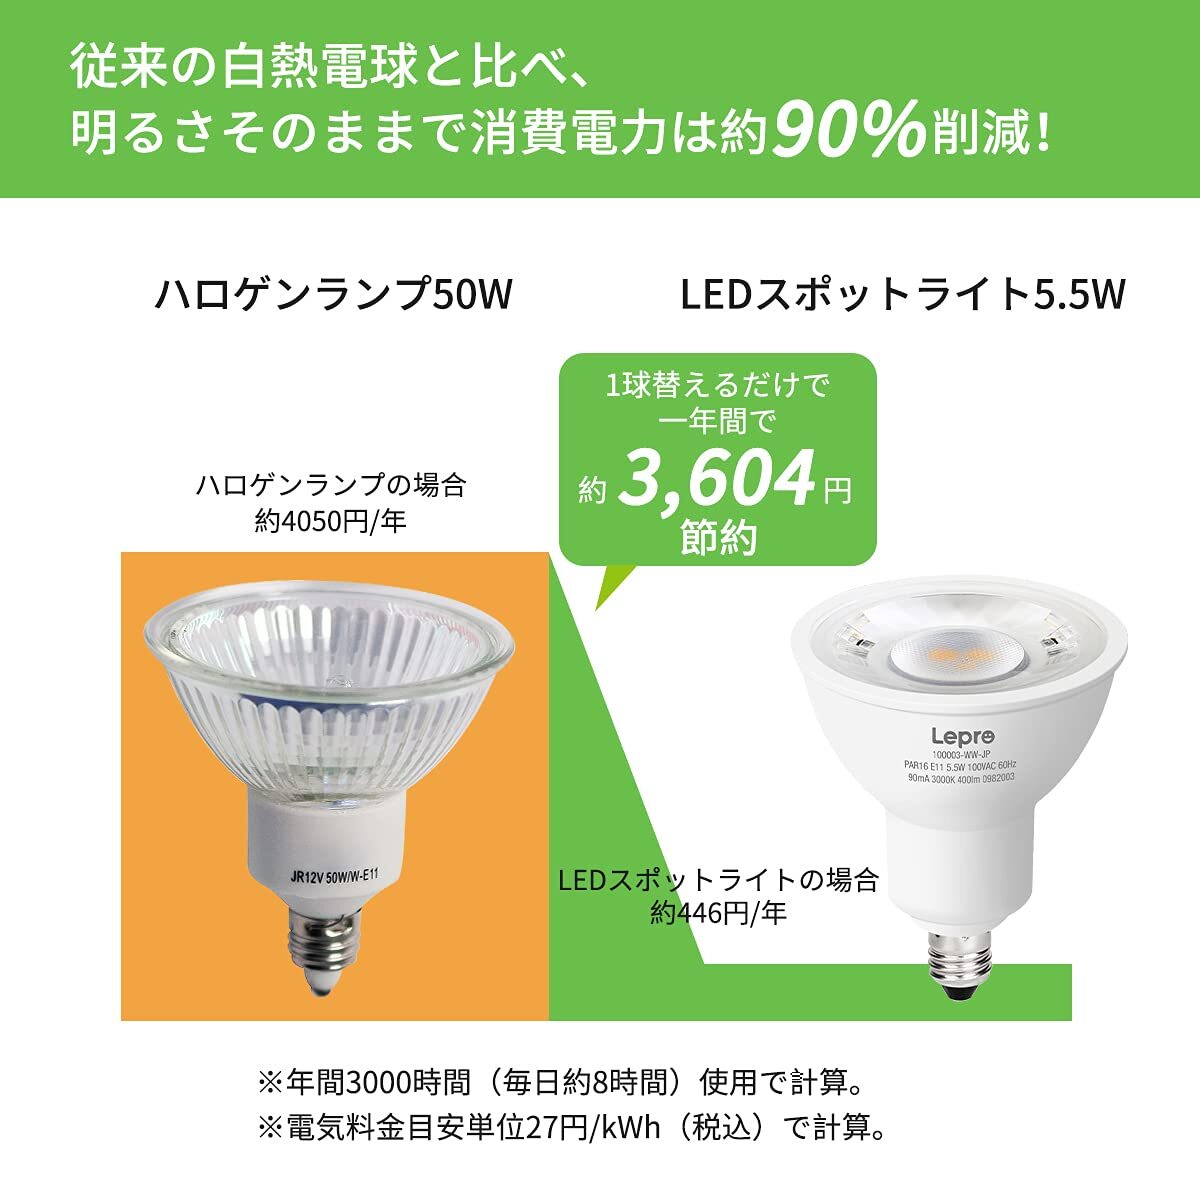 Lepro LED ハロゲン電球 E11 LED電球 スポットライト ハロゲン 50W形相当 狭角 ビーム角度40° 5.5W 400lm 電球色の画像6